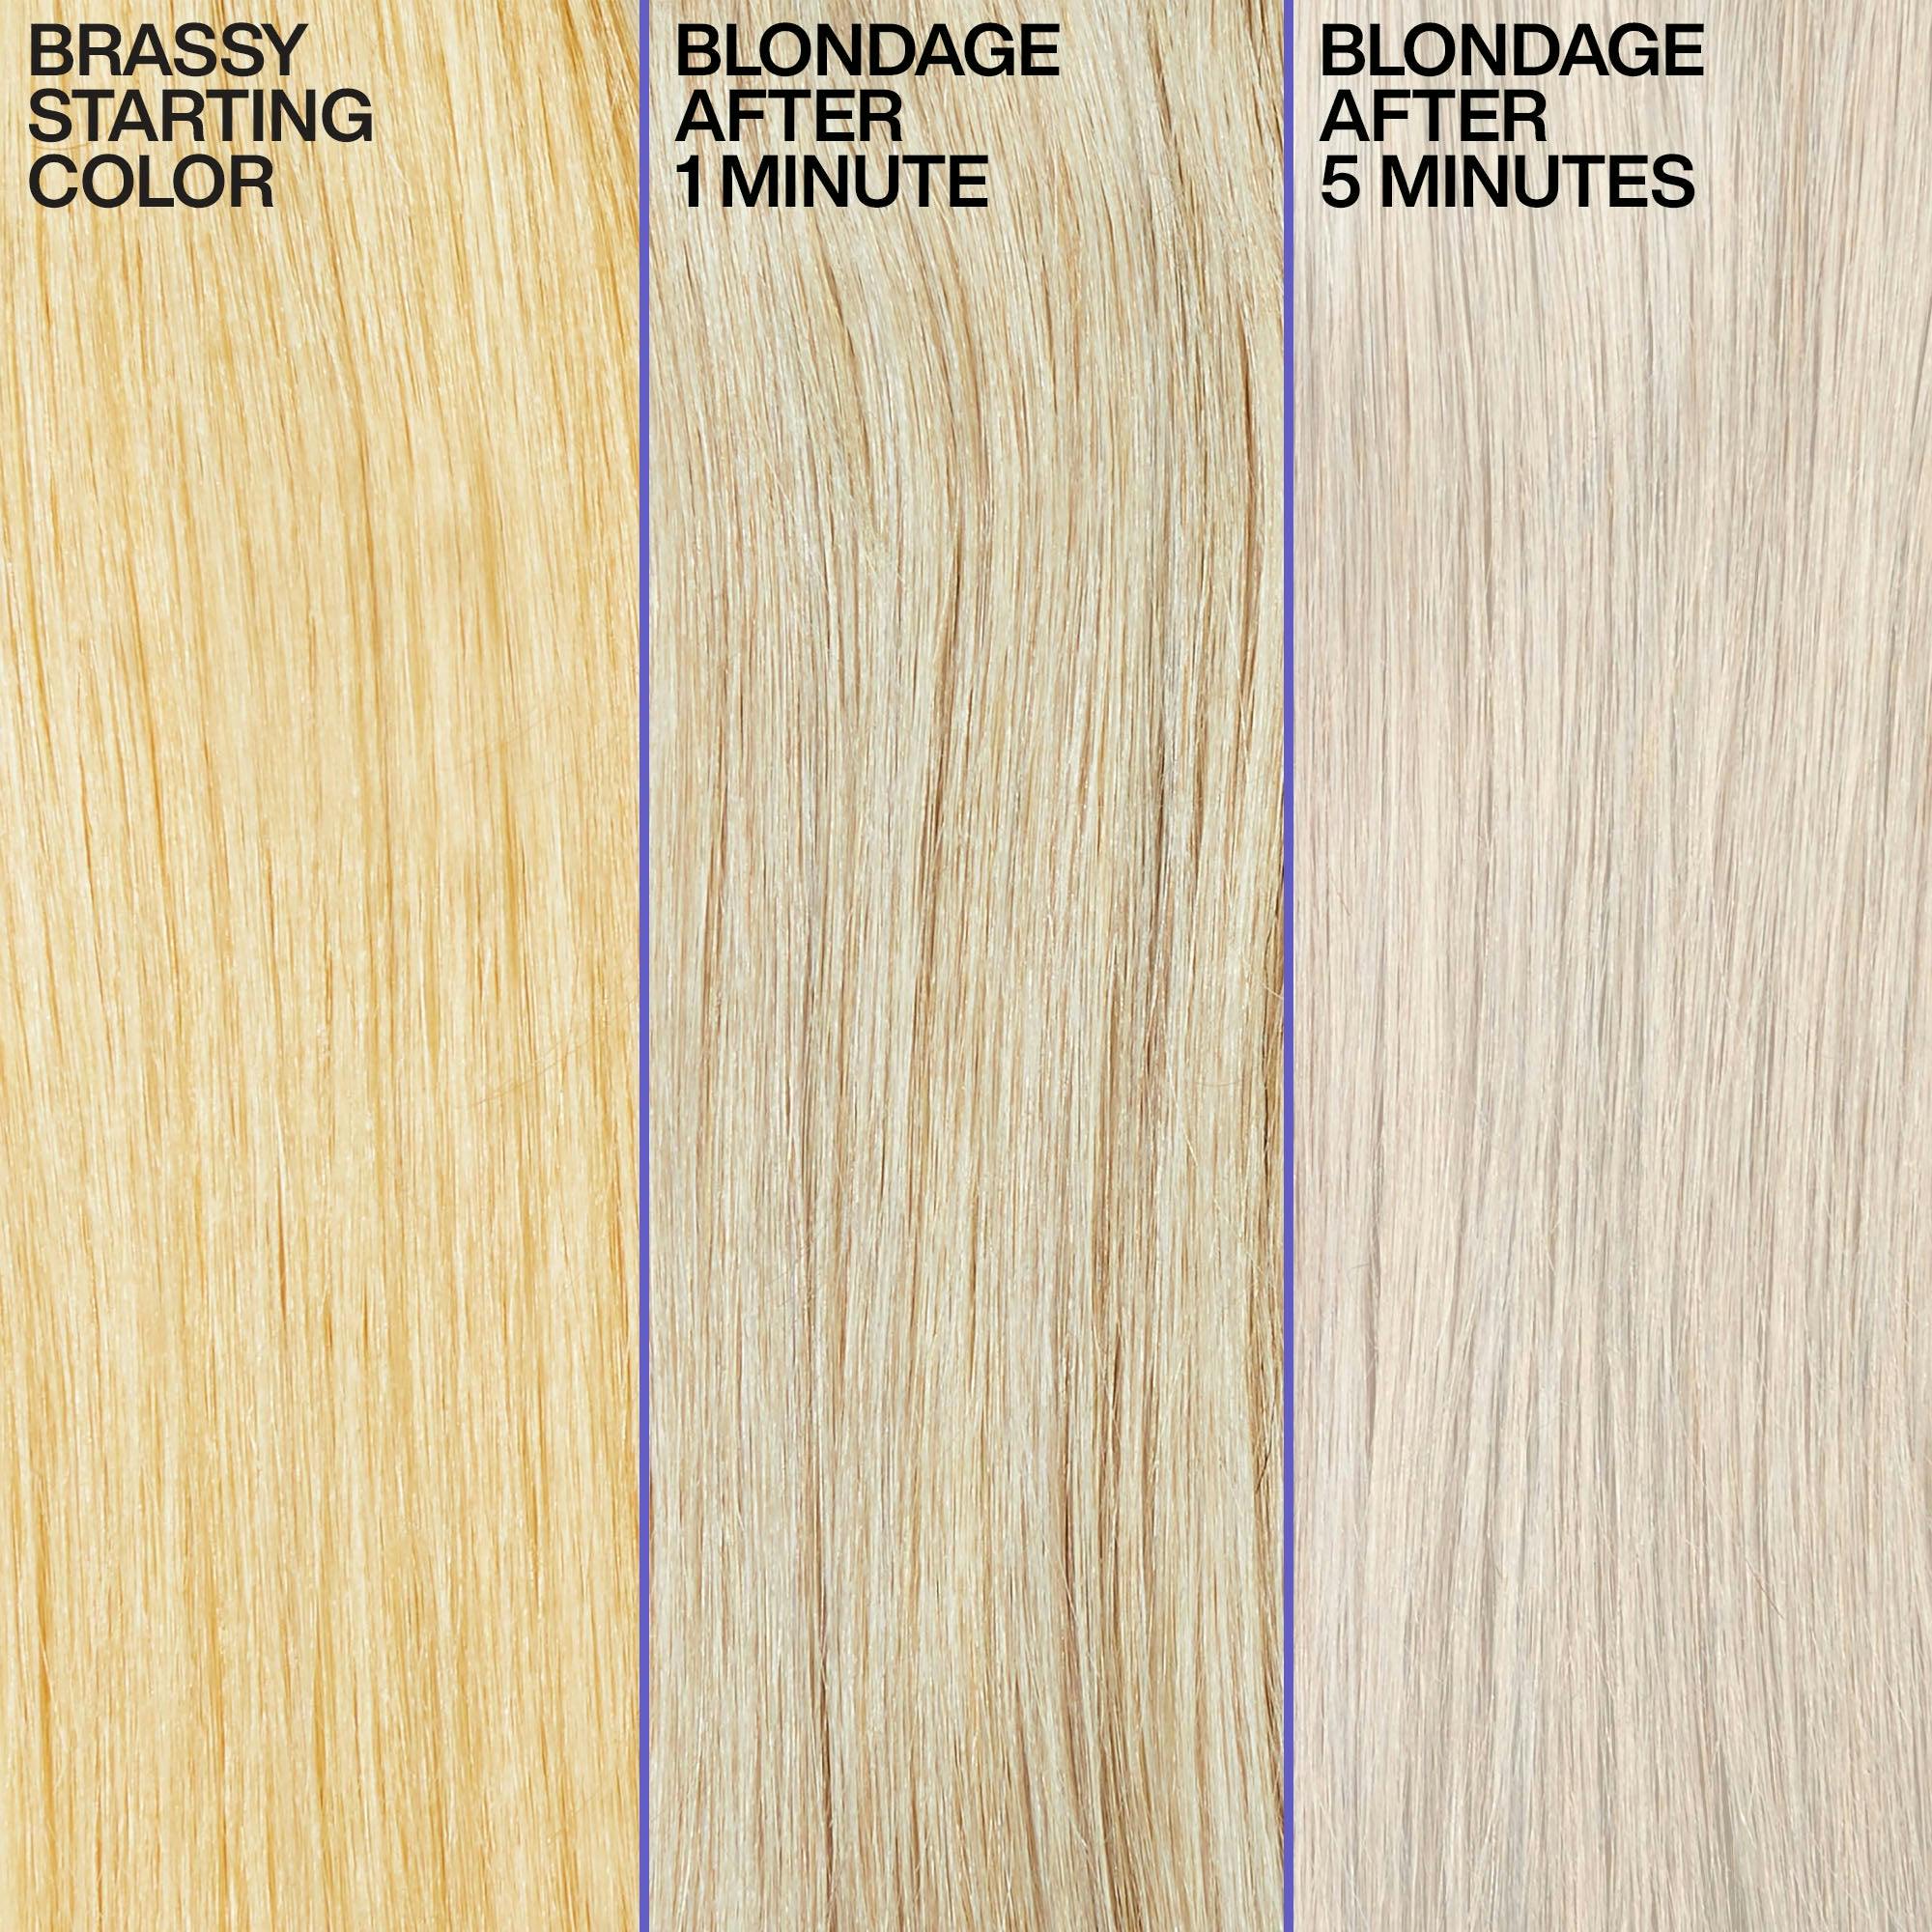 Redken Color Extend Blondage Color Depositing Purple Conditioner 300ml